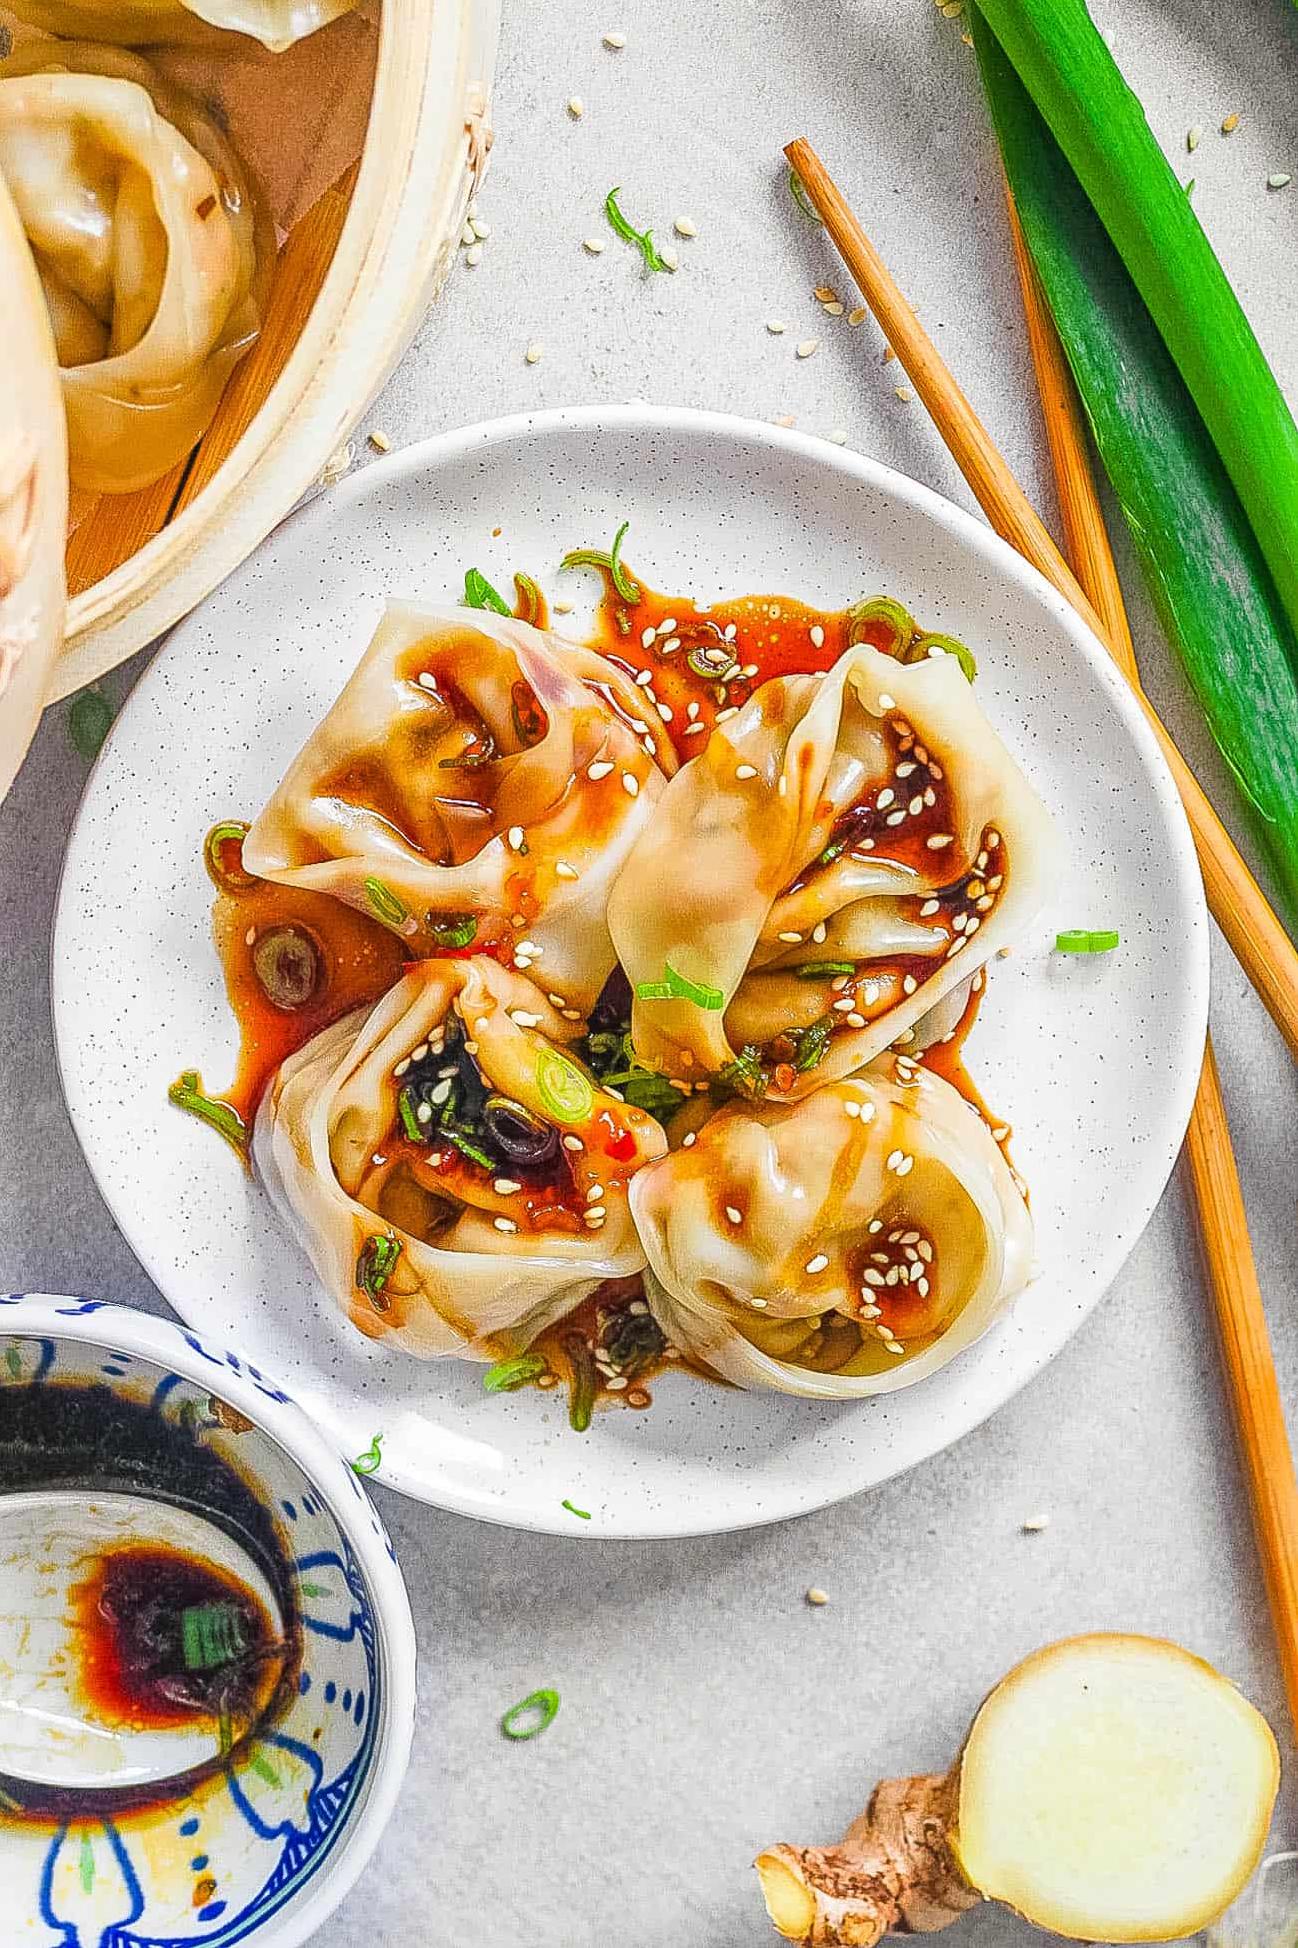  Satisfy your cravings with savory and flavorful vegetarian wonton dumplings.